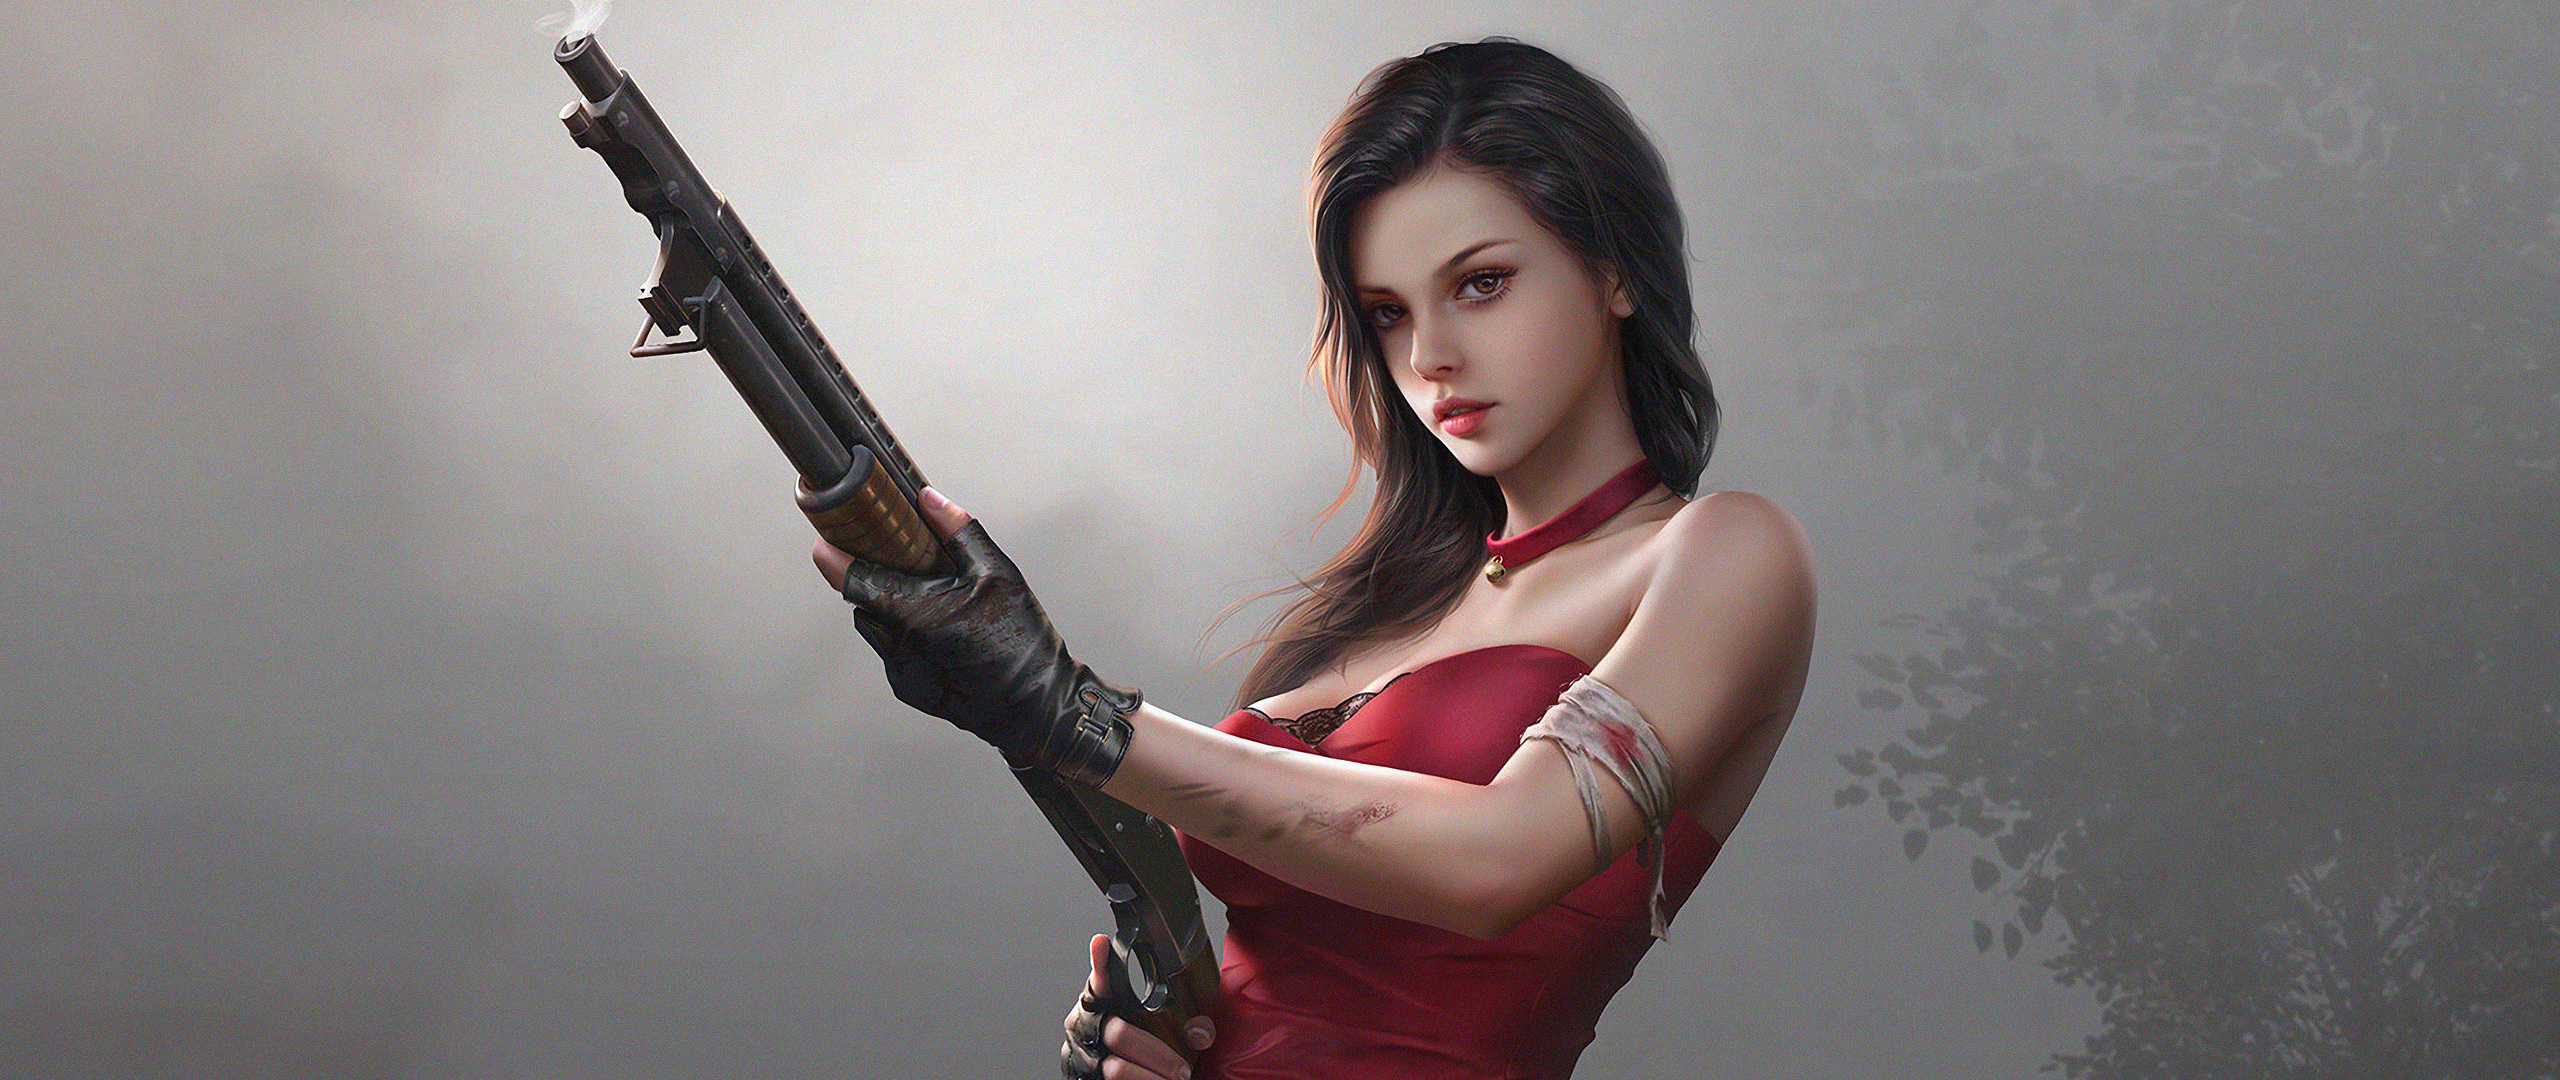 fantasy-girl-in-red-dress-with-gun-4k-lg.jpg